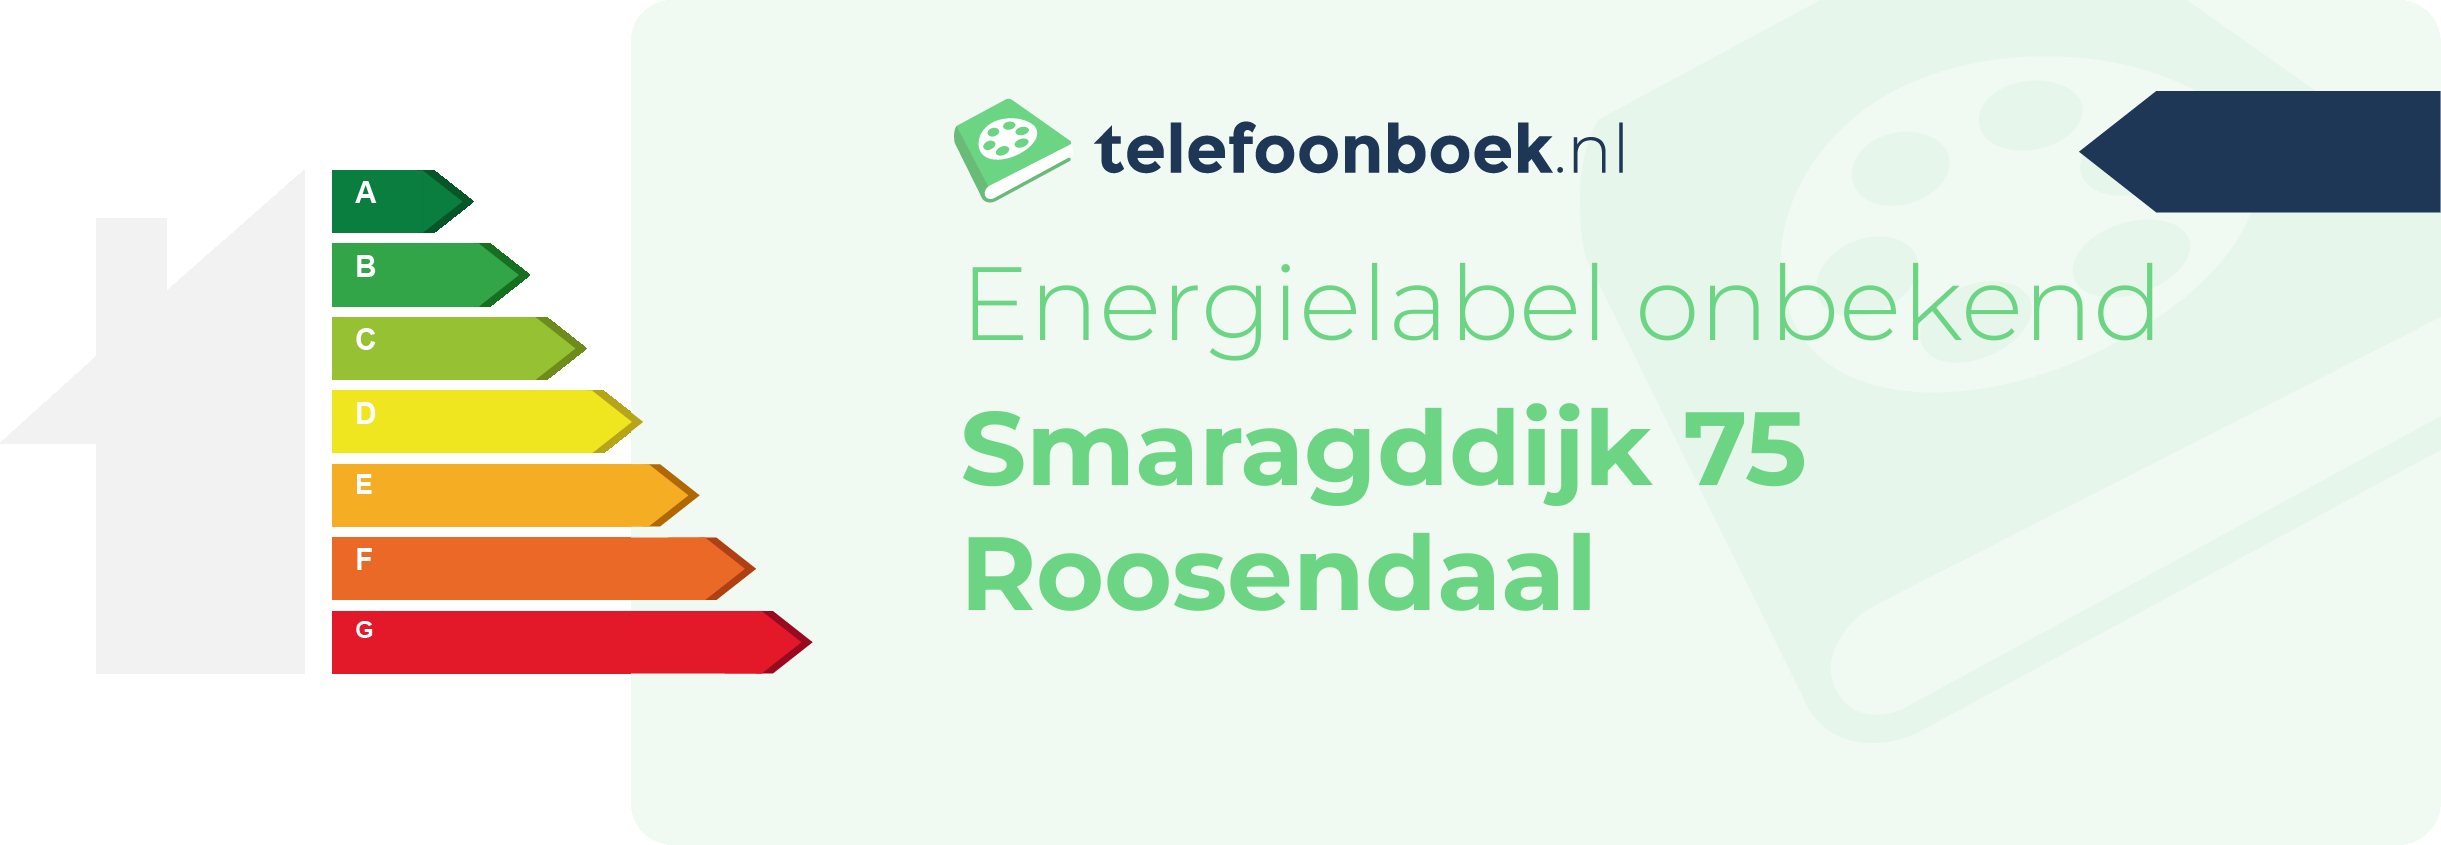 Energielabel Smaragddijk 75 Roosendaal